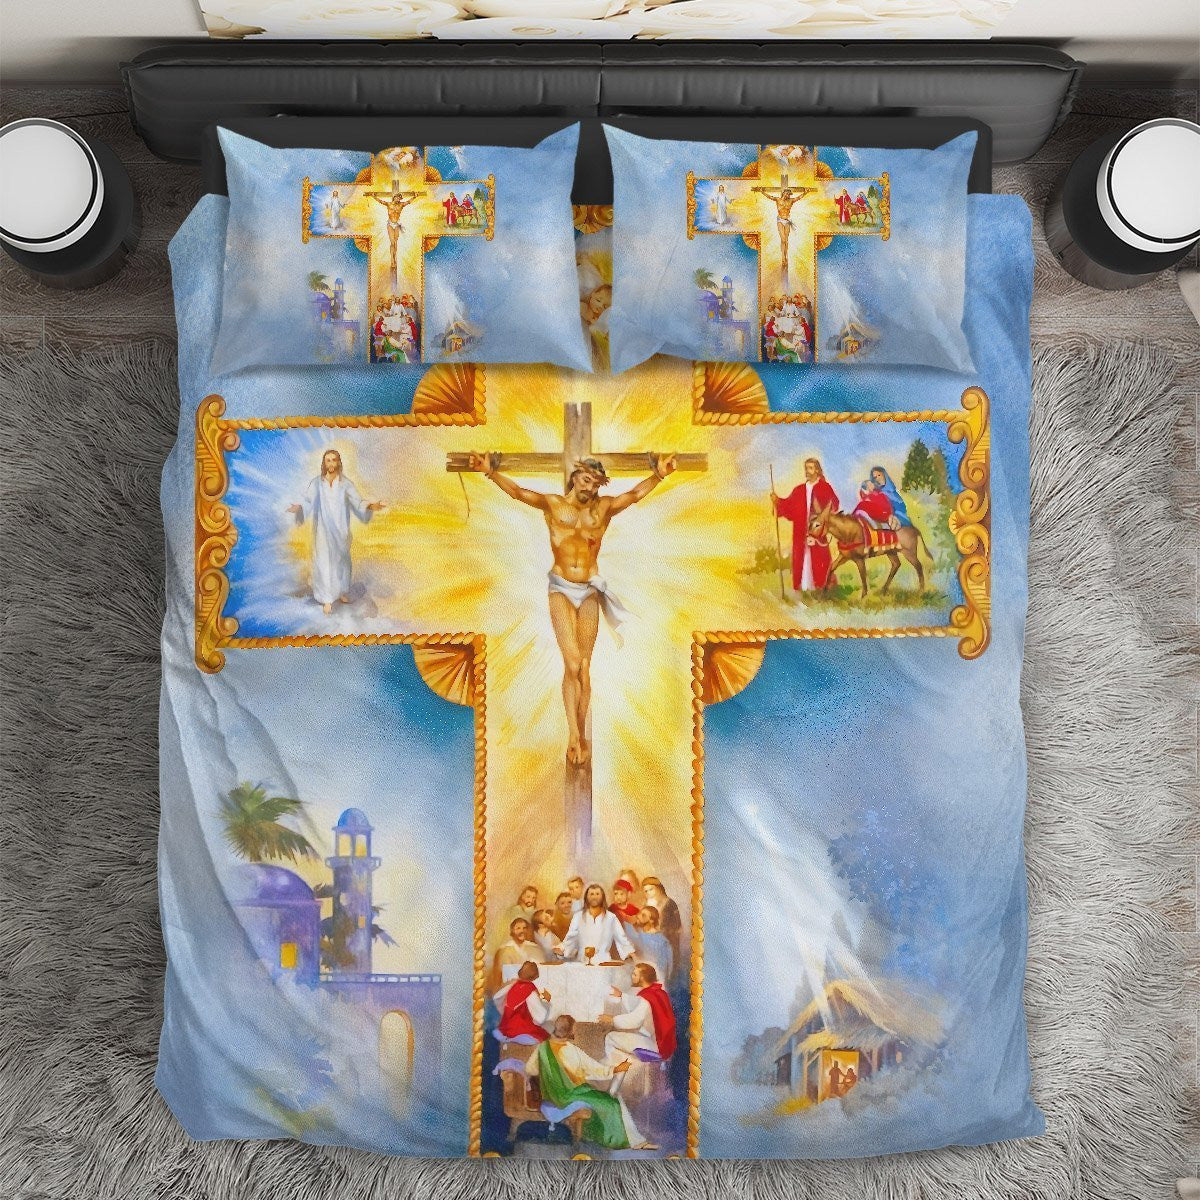 Respect The Cross Jesus Bedding Set - Christian Bedding Sets